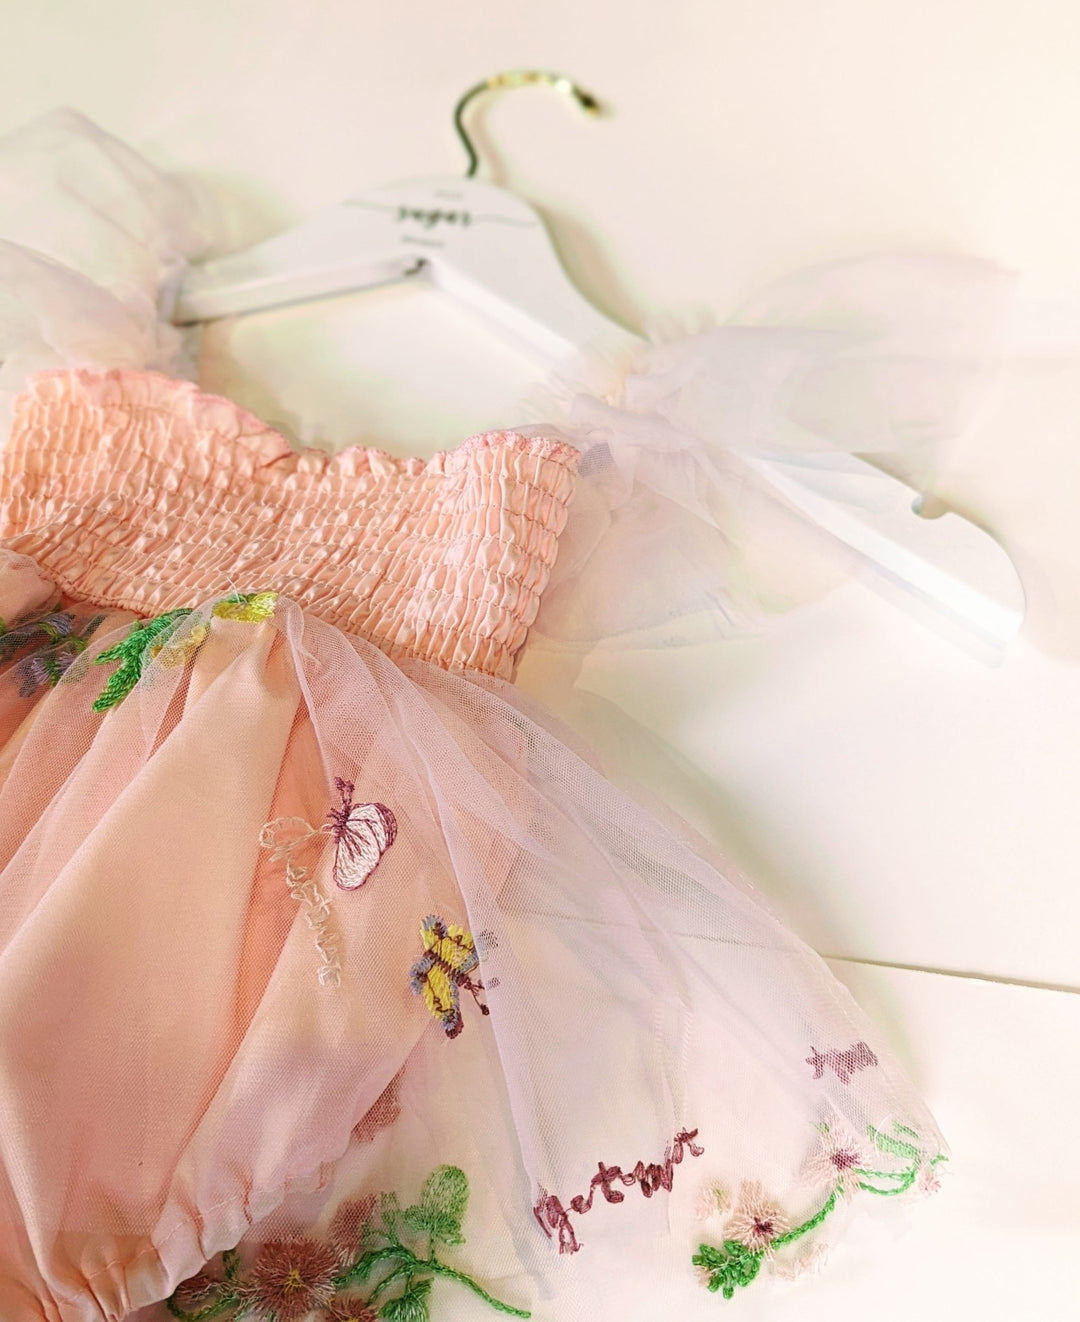 Sweetpea Pink Embroidered Flower Dress - Plum Sugar Shoppe